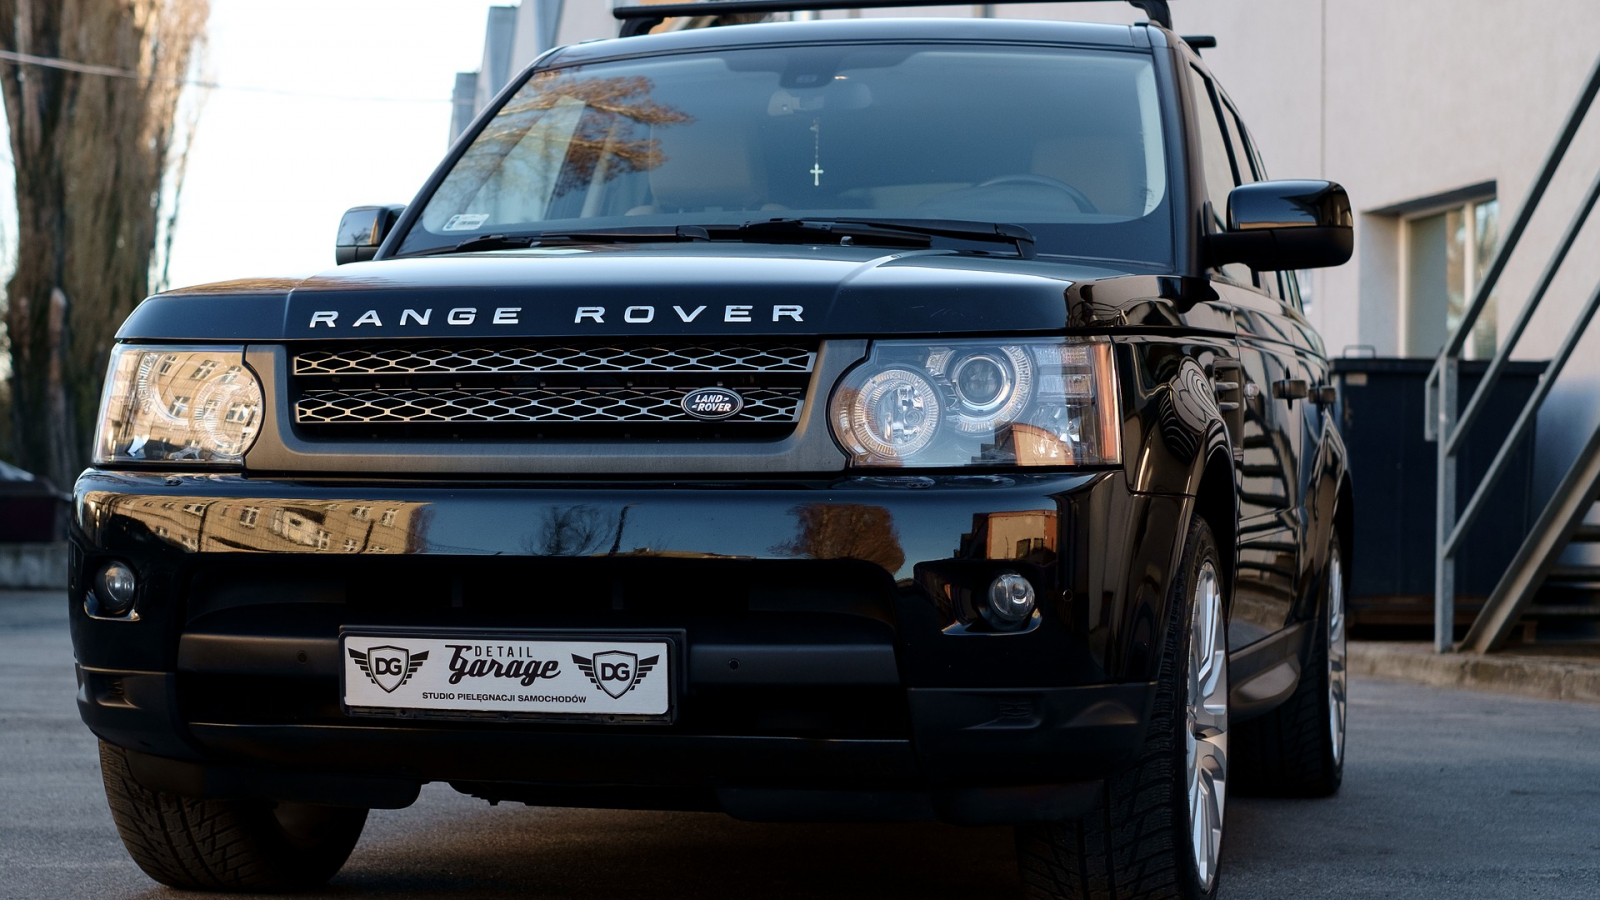 Range Rover Car Hd Wallpapers 1080p